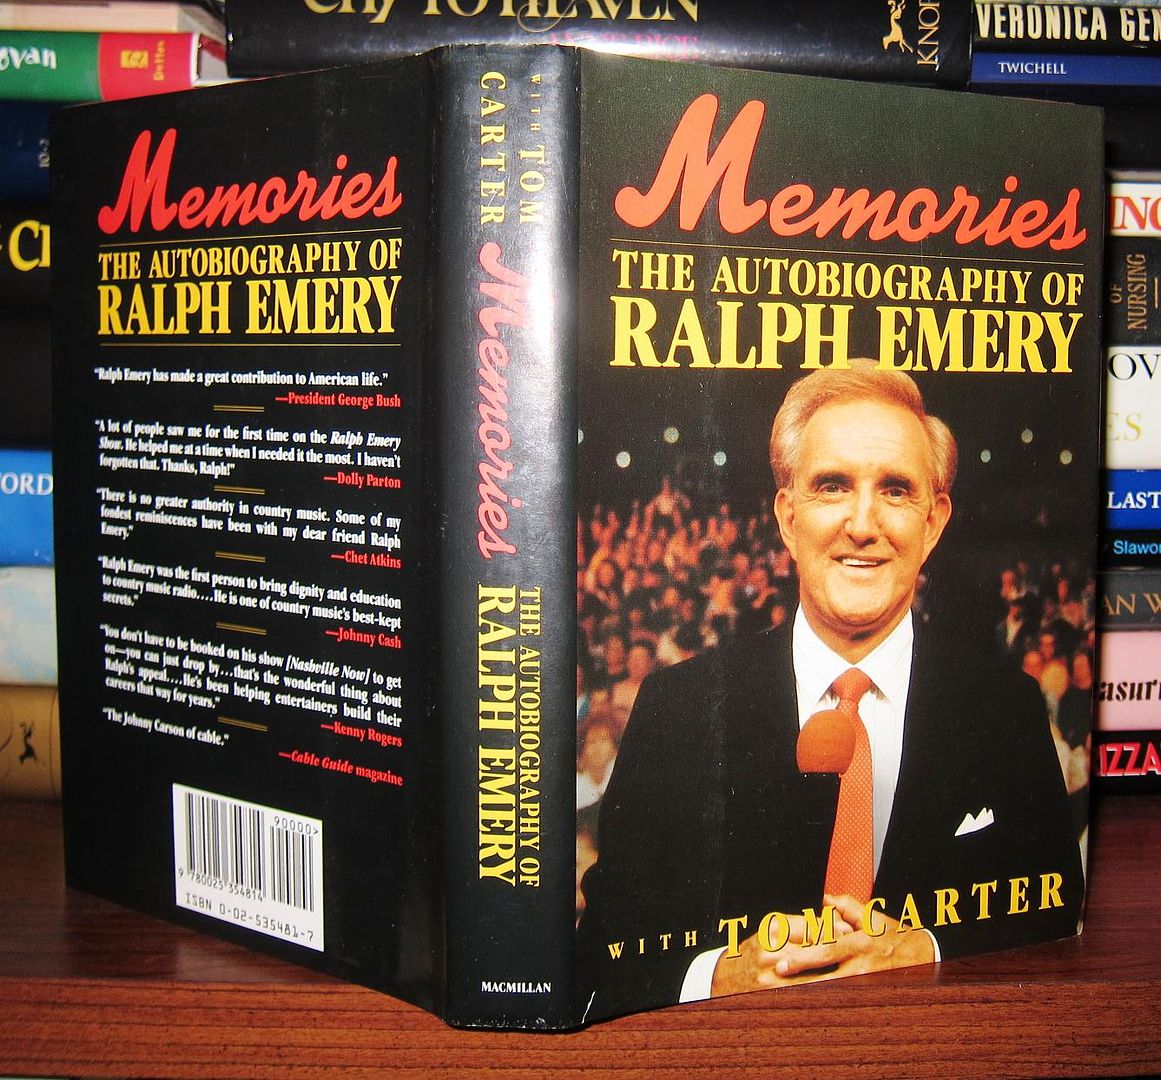 EMERY, RALPH; EMERY, RALPH & TOM CARTER - Memories the Autobiography of Ralph Emery